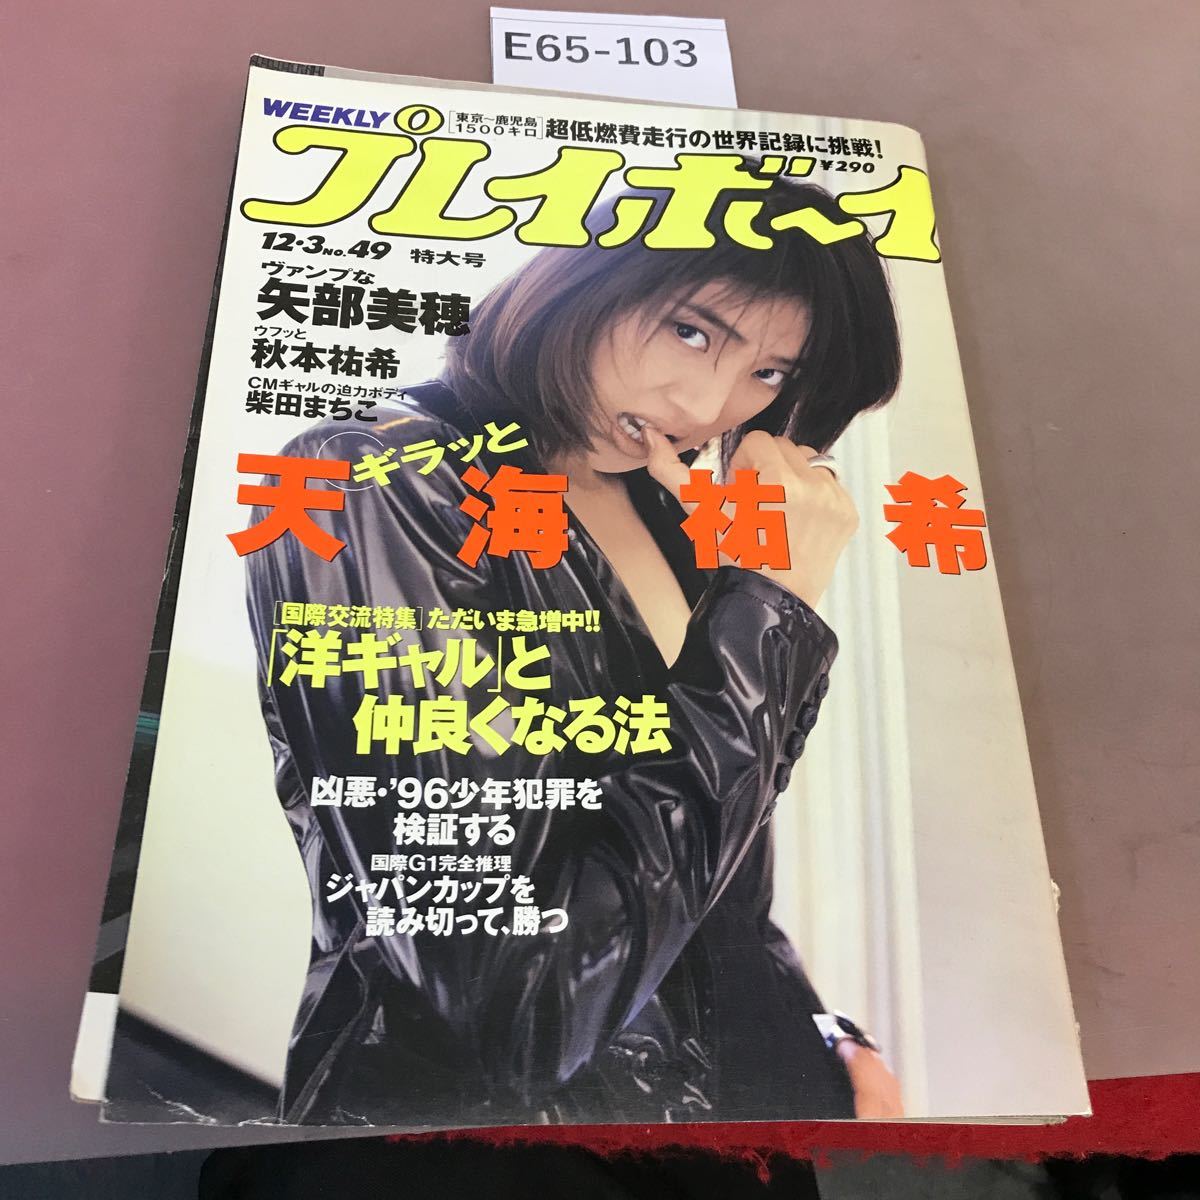 E65-103 Weekly Playboy № 49 опубликовано 3 декабря 1996 года Shueisha Tenmai и т. Д.